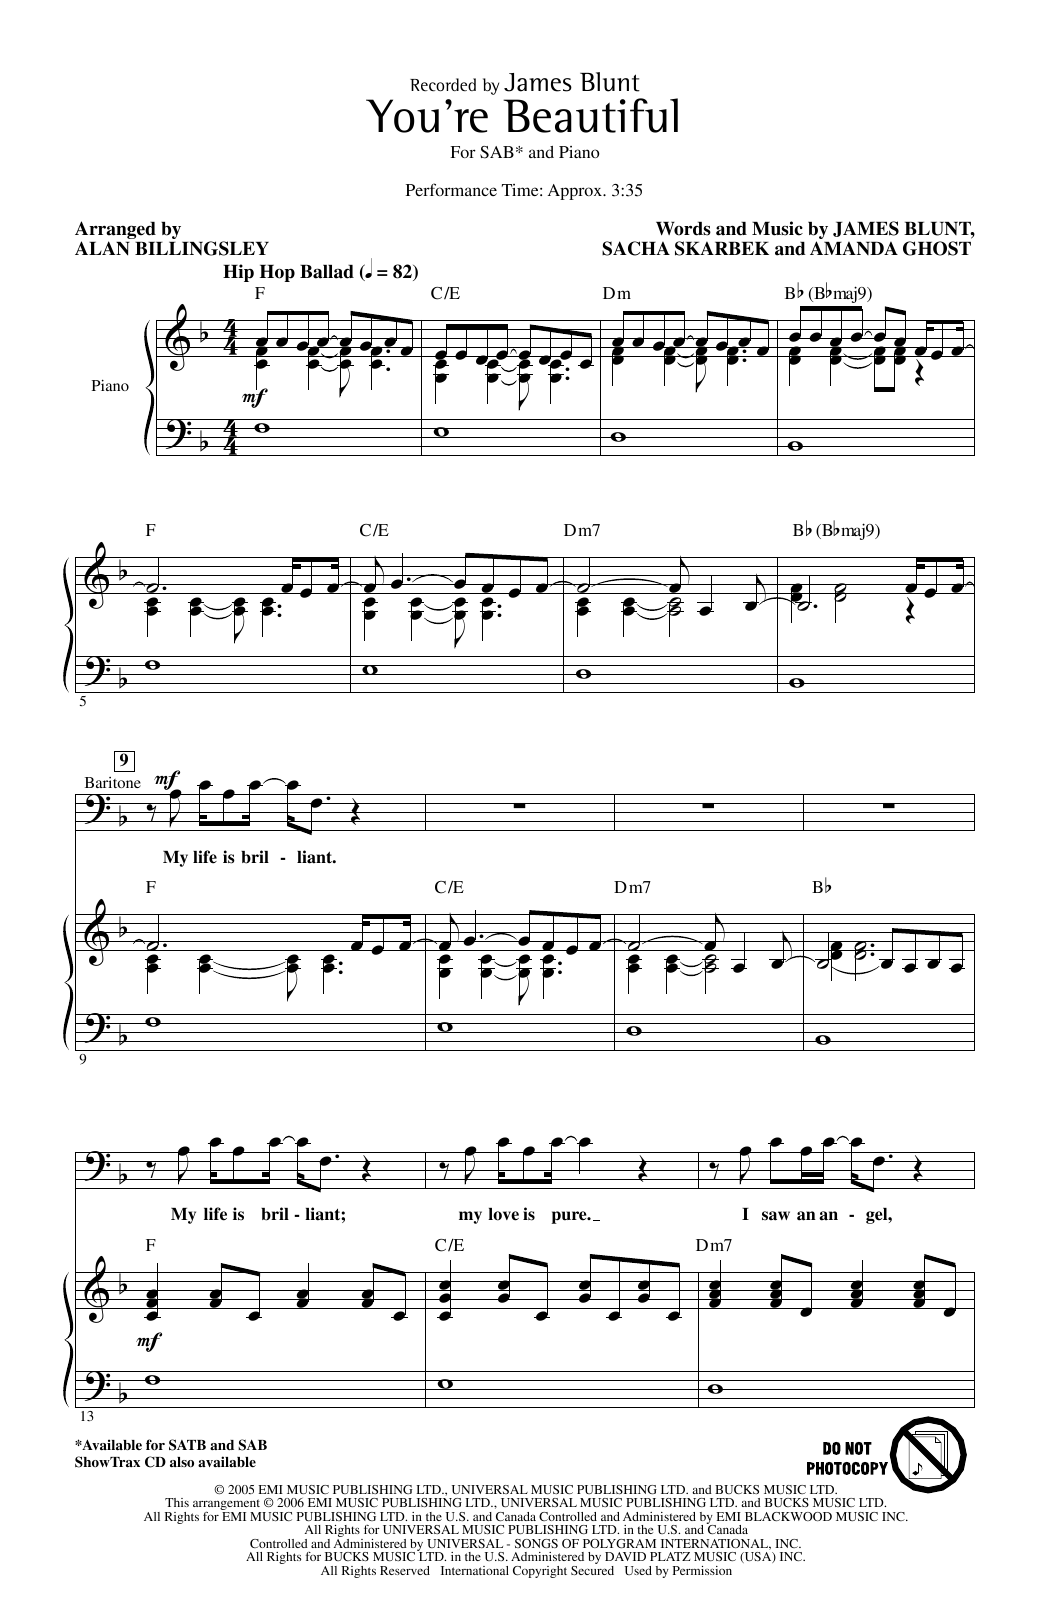 James Blunt You're Beautiful (arr. Alan Billingsley) Sheet Music Notes & Chords for SAB Choir - Download or Print PDF